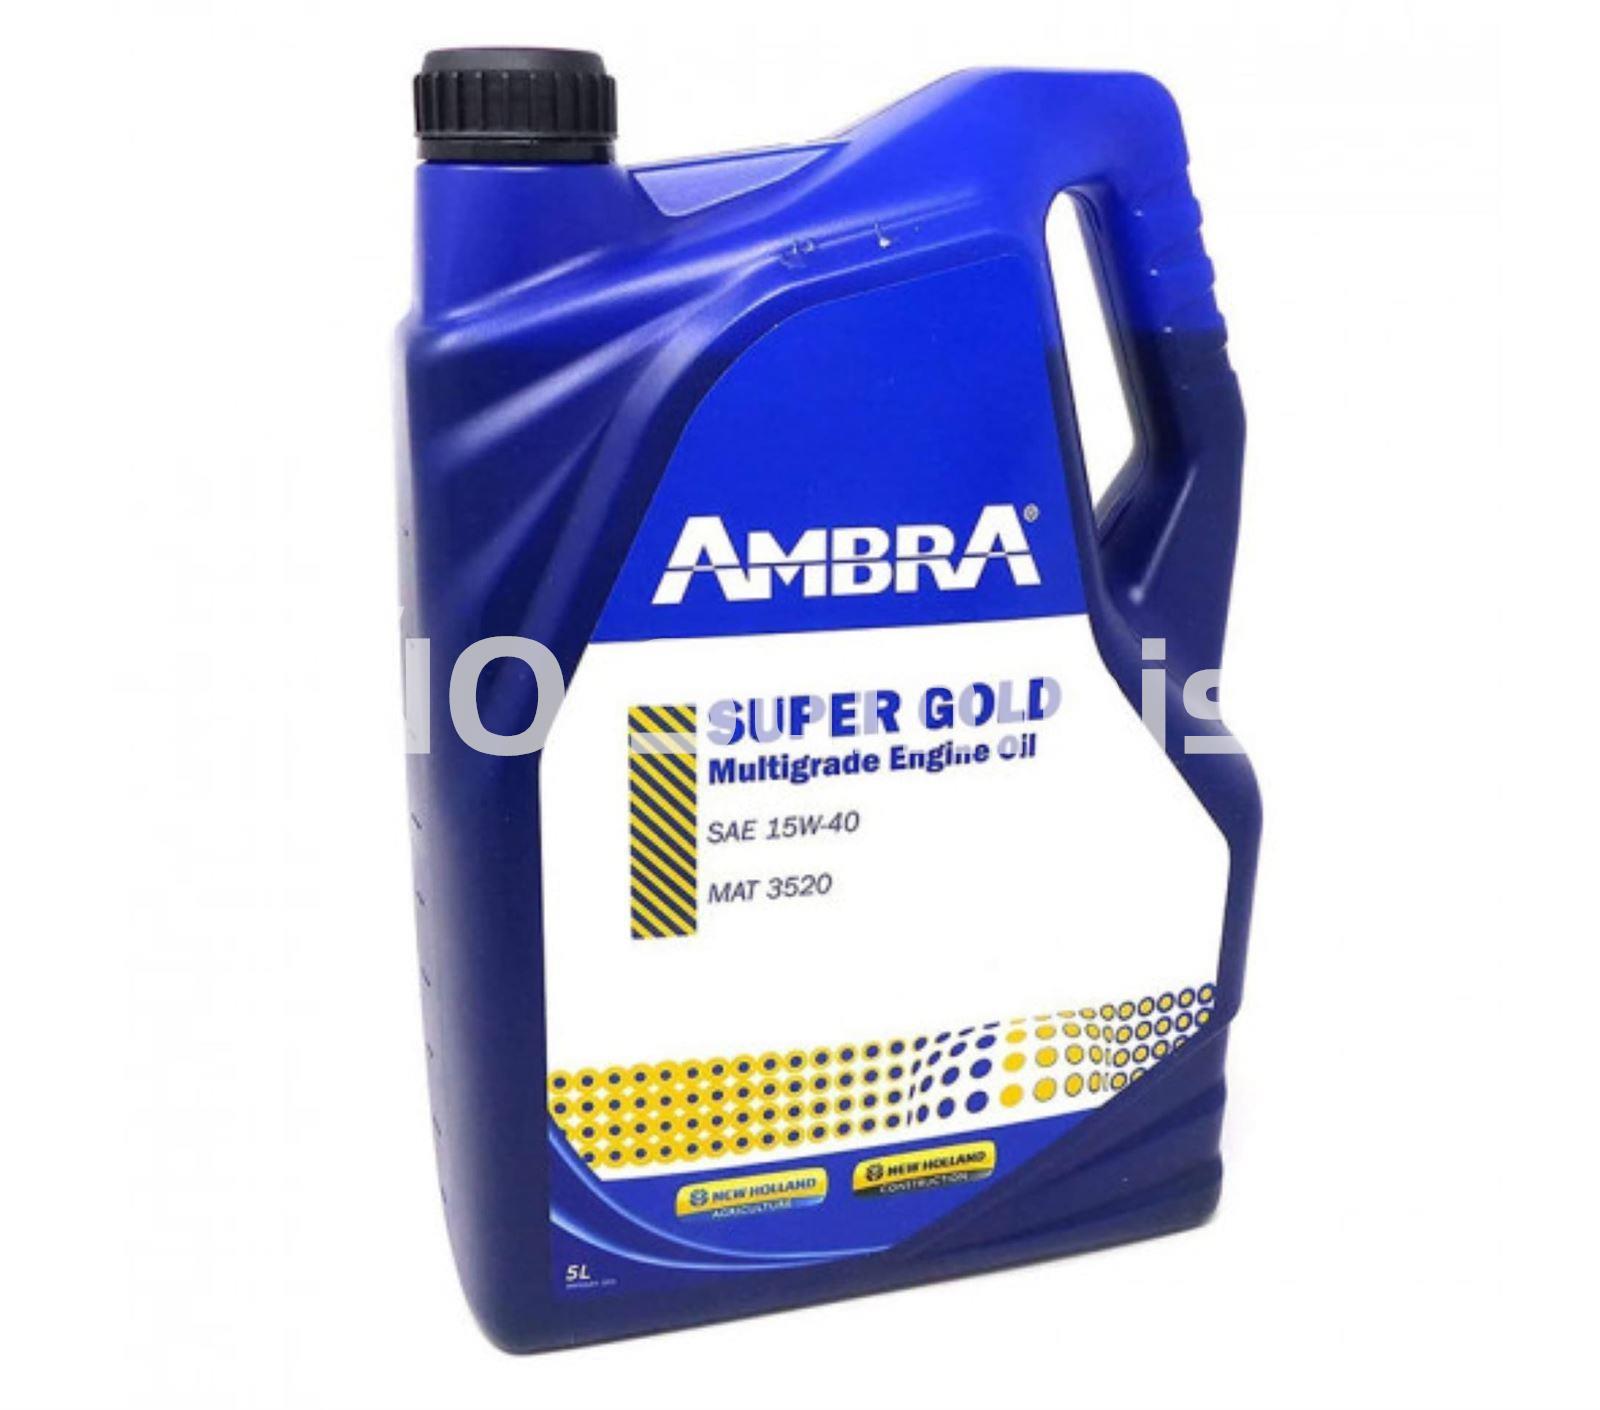 Aceite Ambra Super Gold Sae 15w40 - Imagen 1